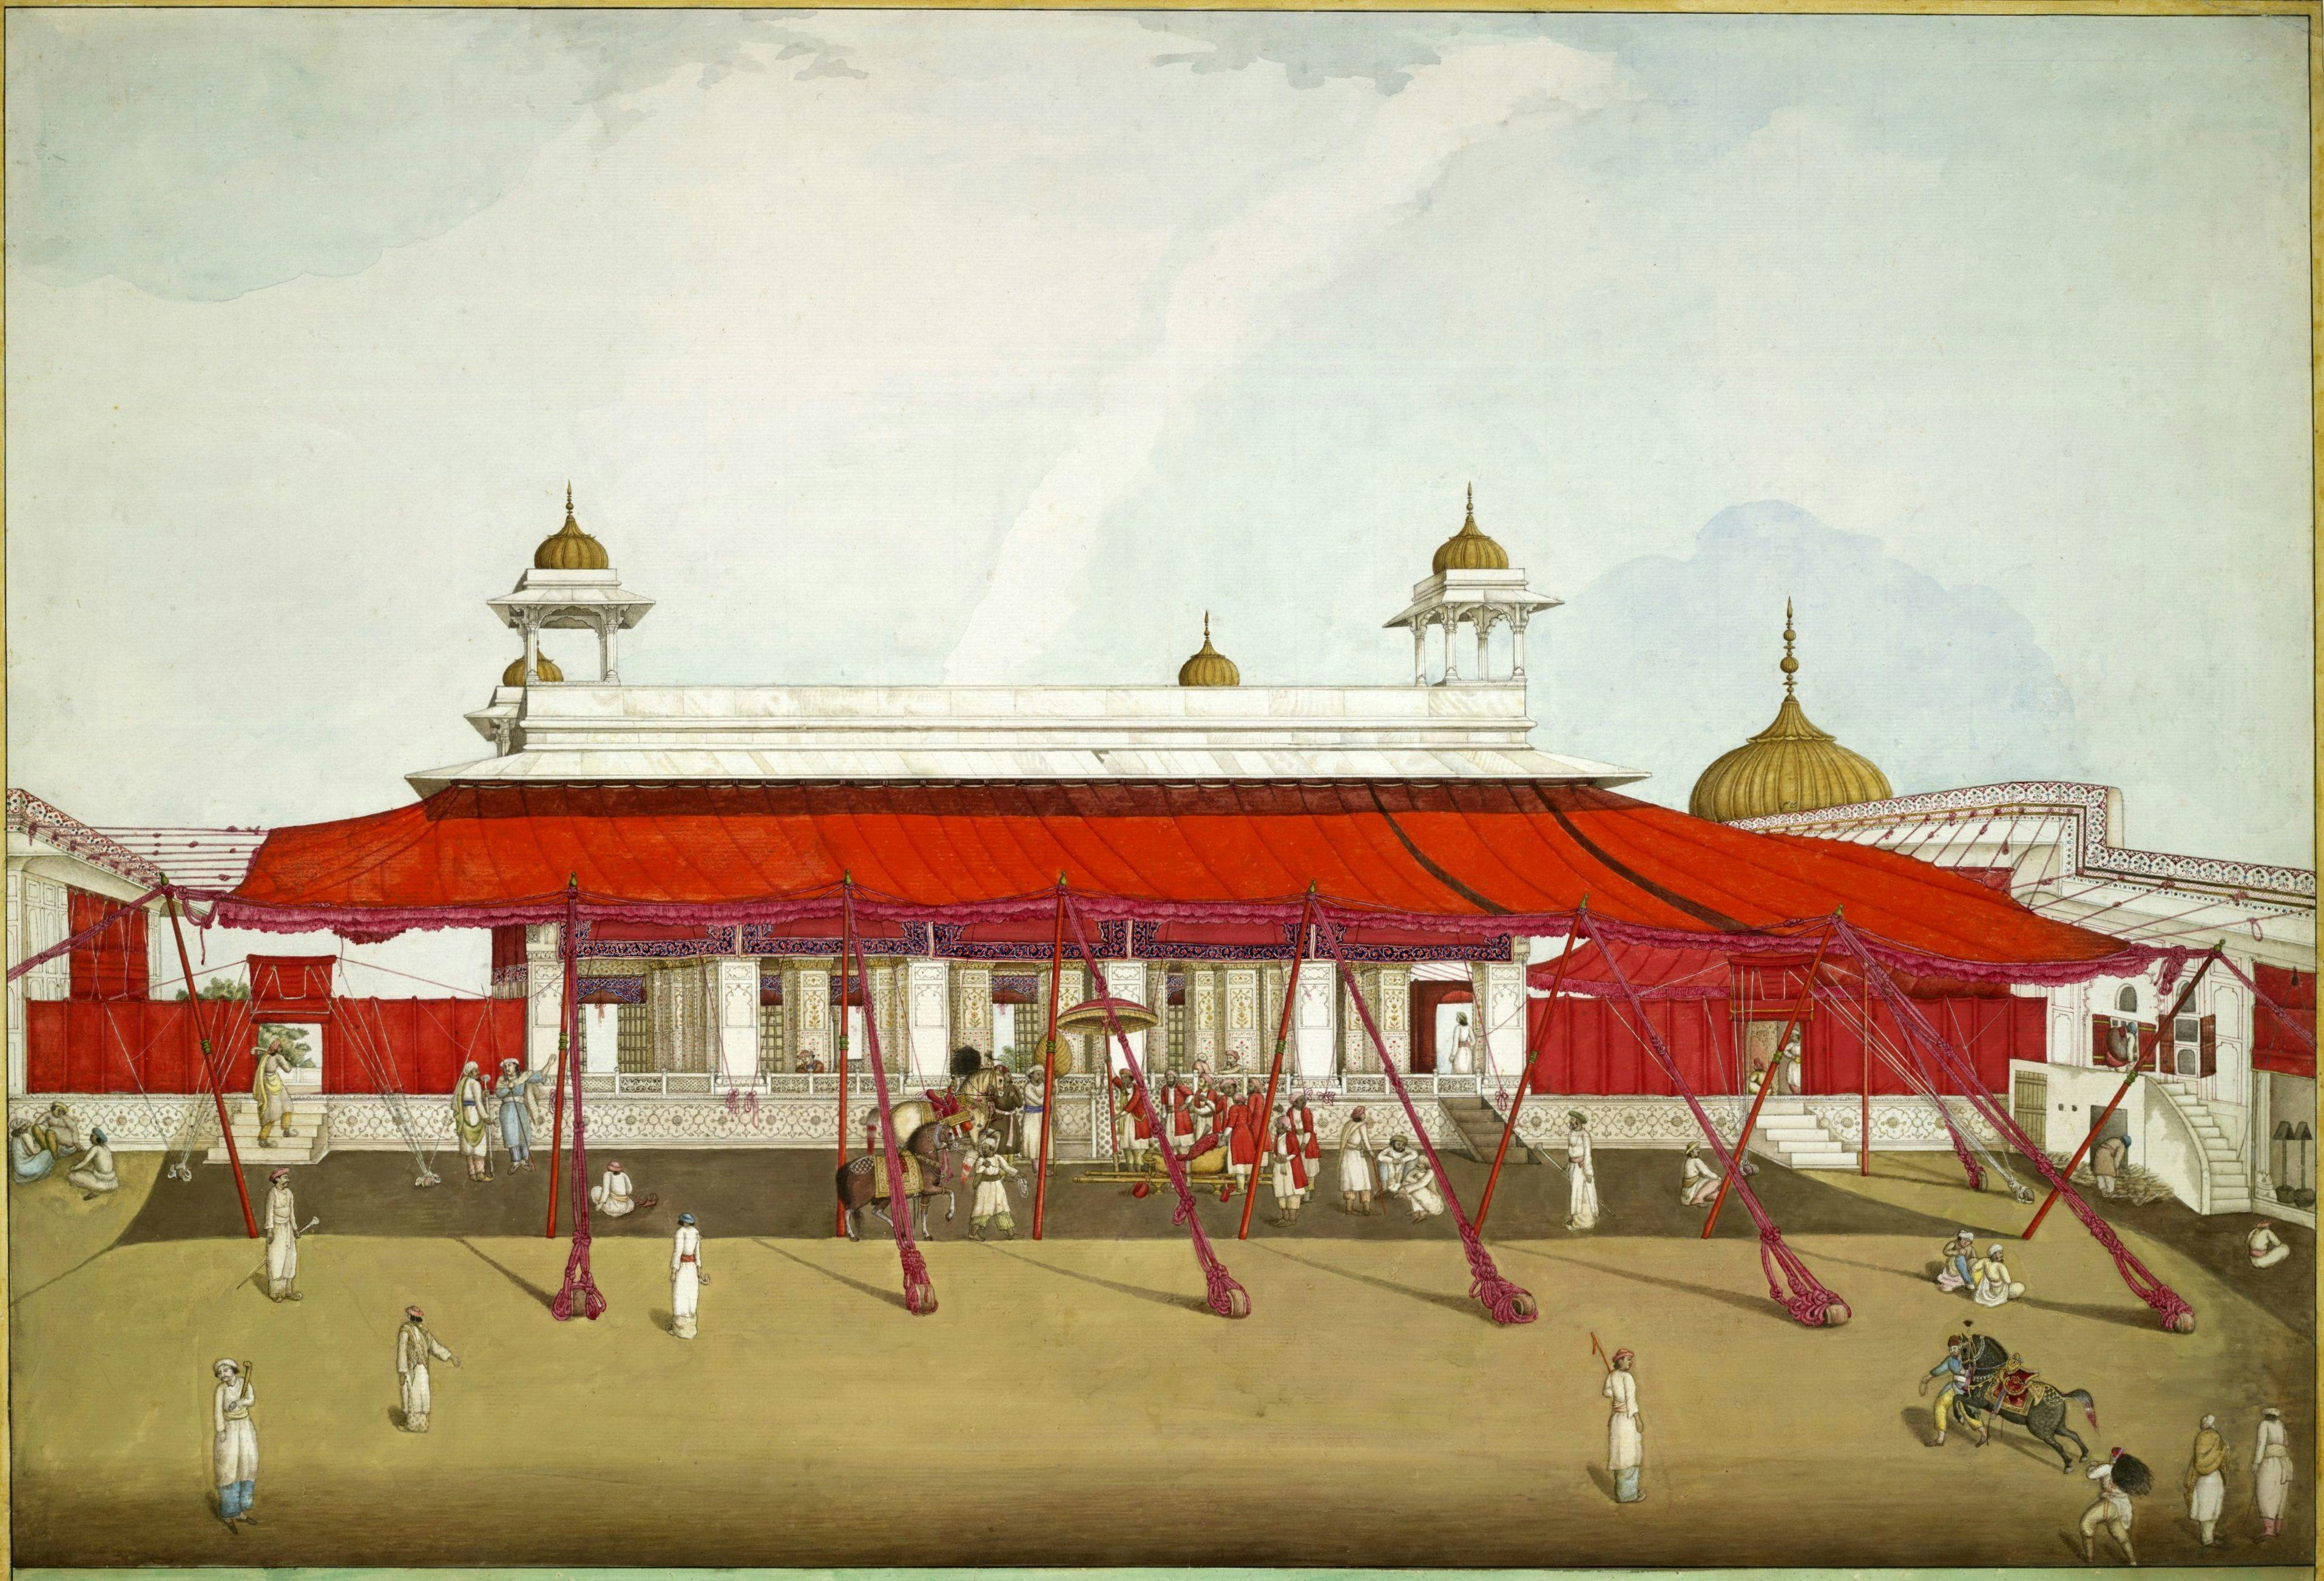 Diwan-i-Khas with shamianas, painting by Ghulam Ali Khan